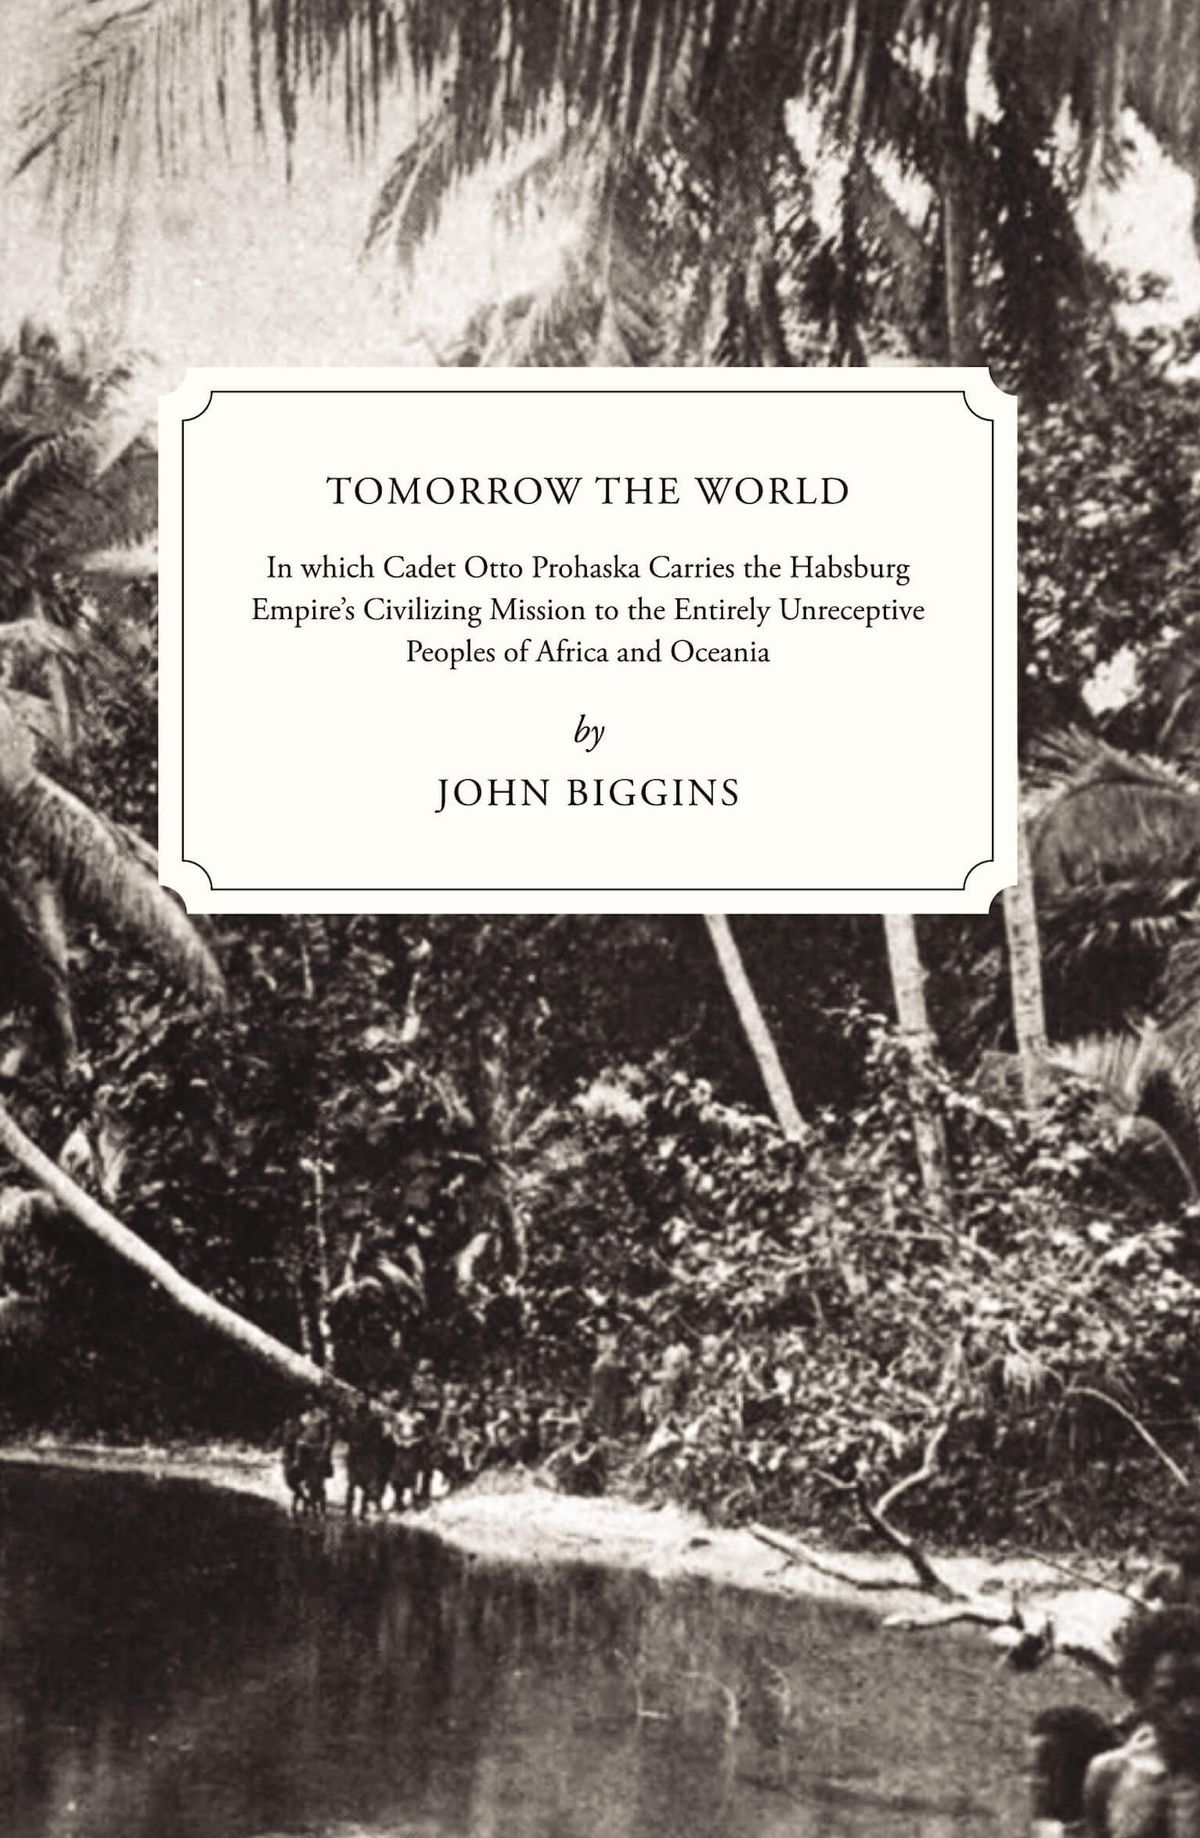 Tomorrow The World by John Biggins